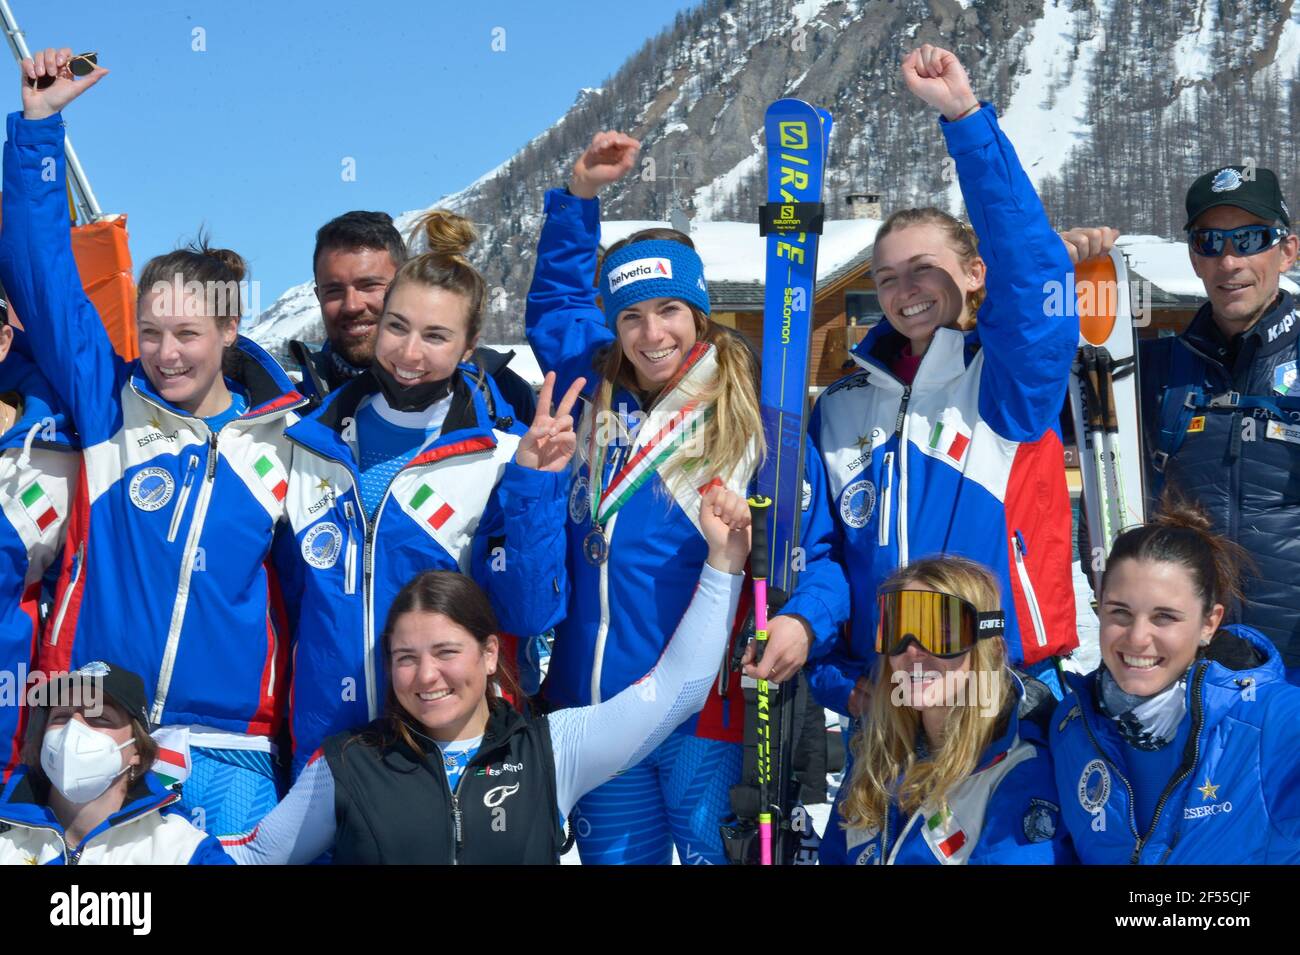 Livigno, Livigno, Italy, 24 Mar 2021, Esercito Italiano Ski Team during Absolute Italian Alpine Ski Championships 2021, alpine ski race - Photo Giorgio Panacci / LM Stock Photo